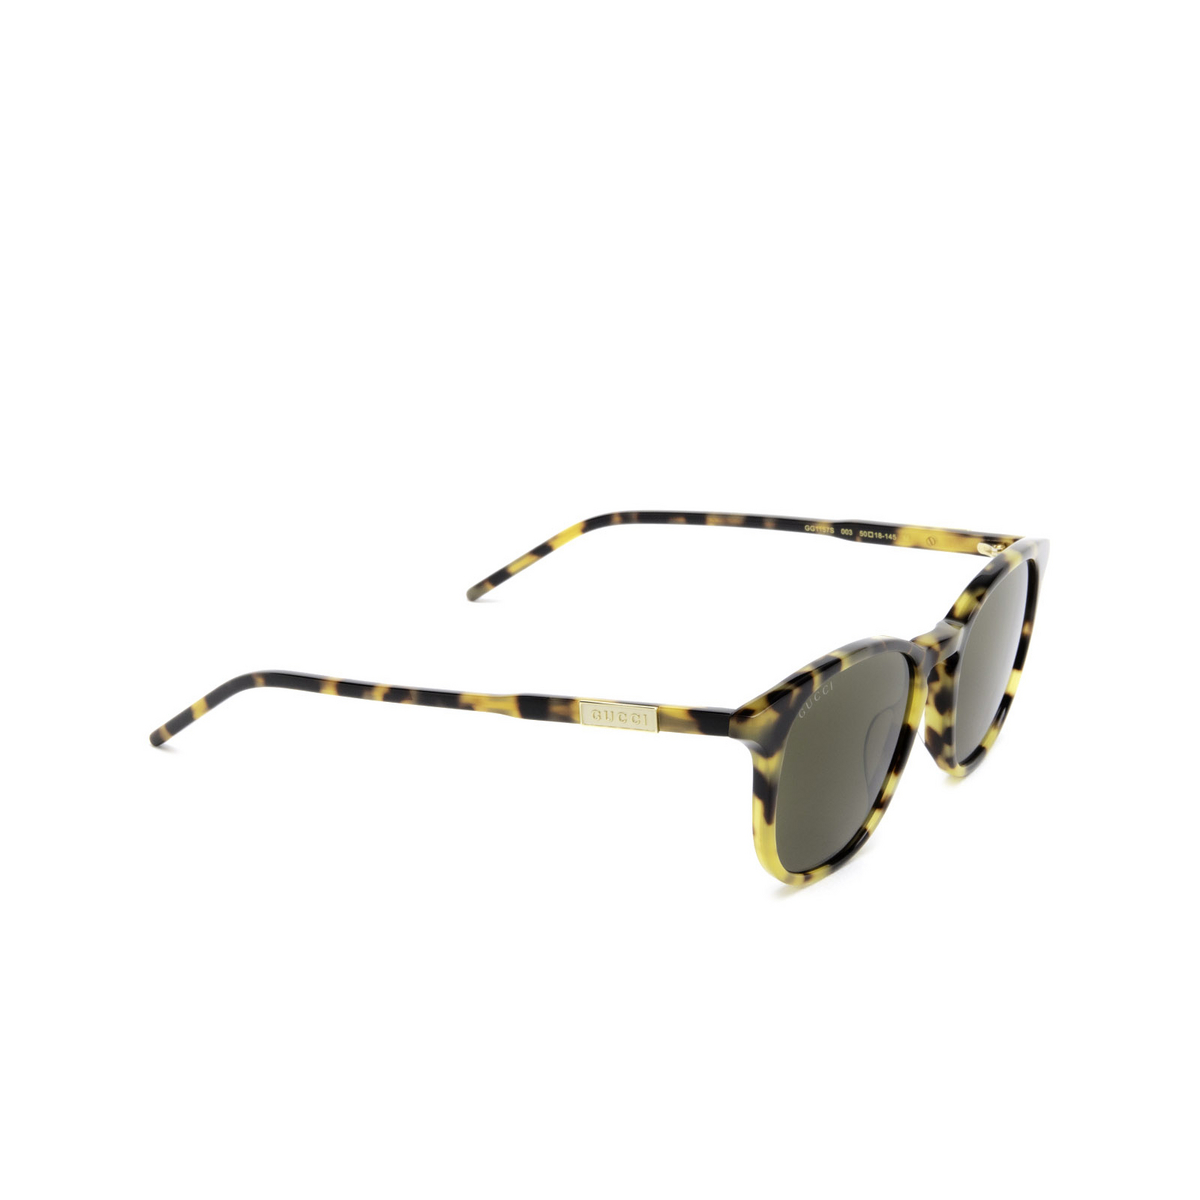 Gucci® Round Sunglasses: GG1157S color Havana 003 - three-quarters view.